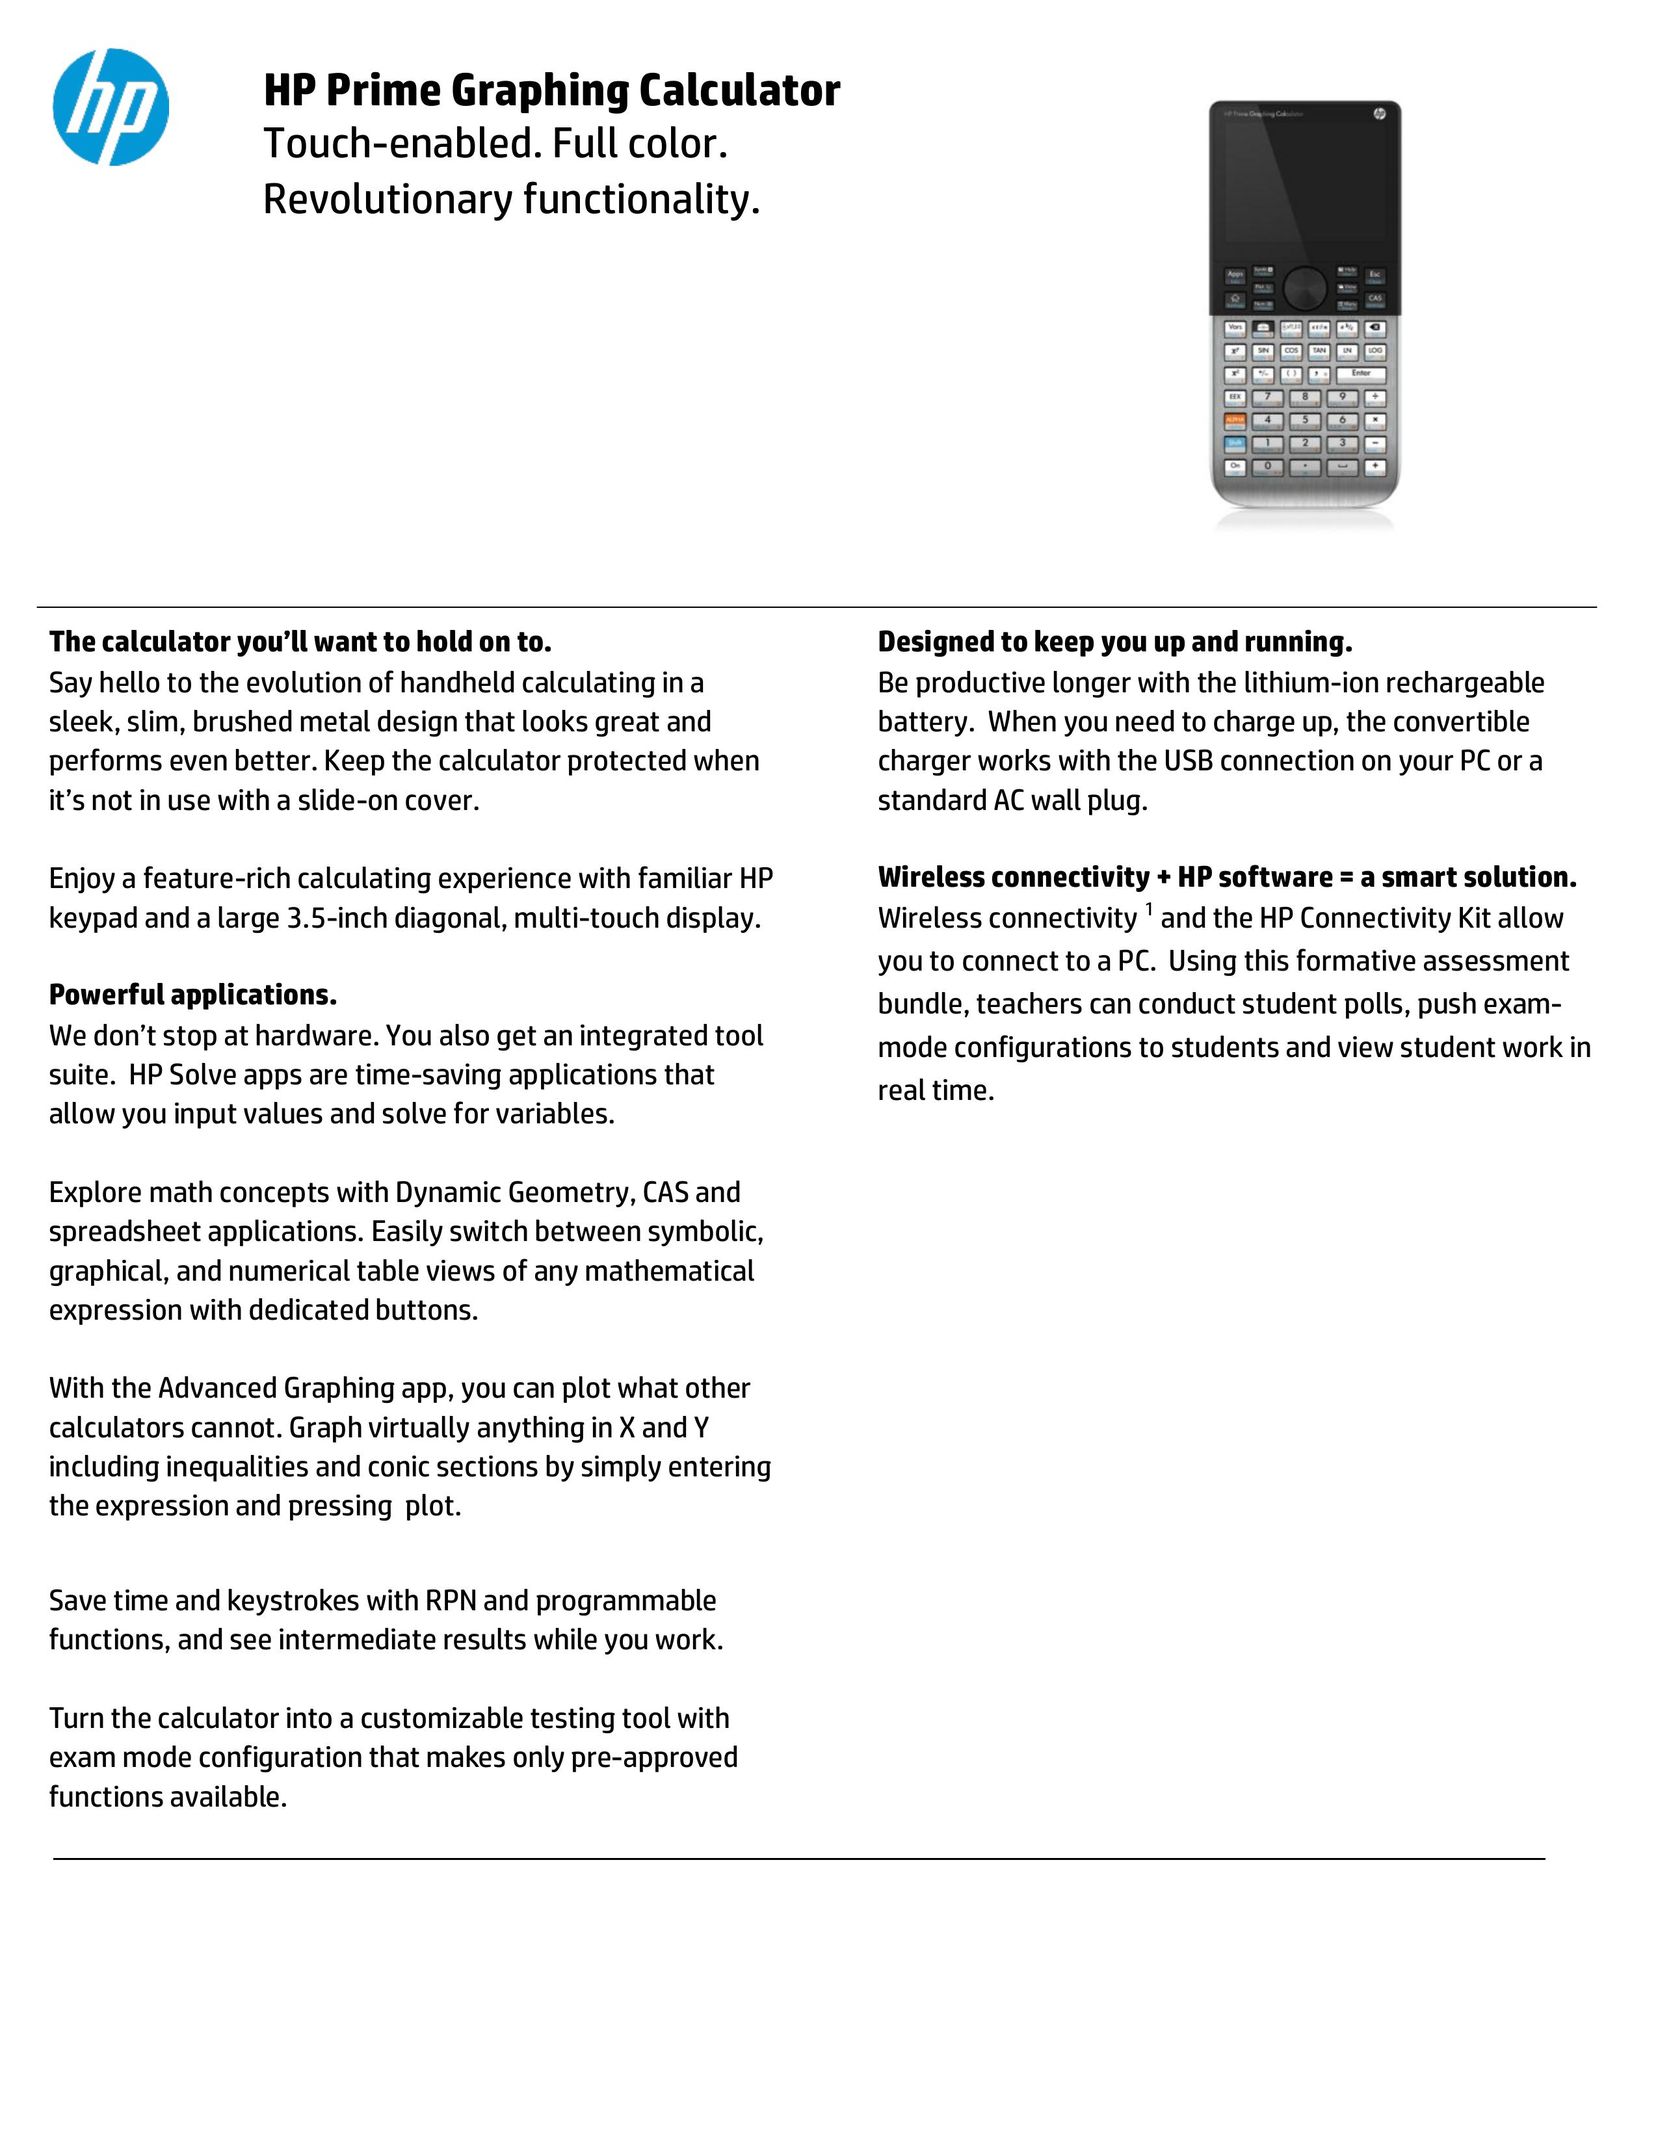 HP (Hewlett-Packard) HWPNW280AAABA Calculator User Manual